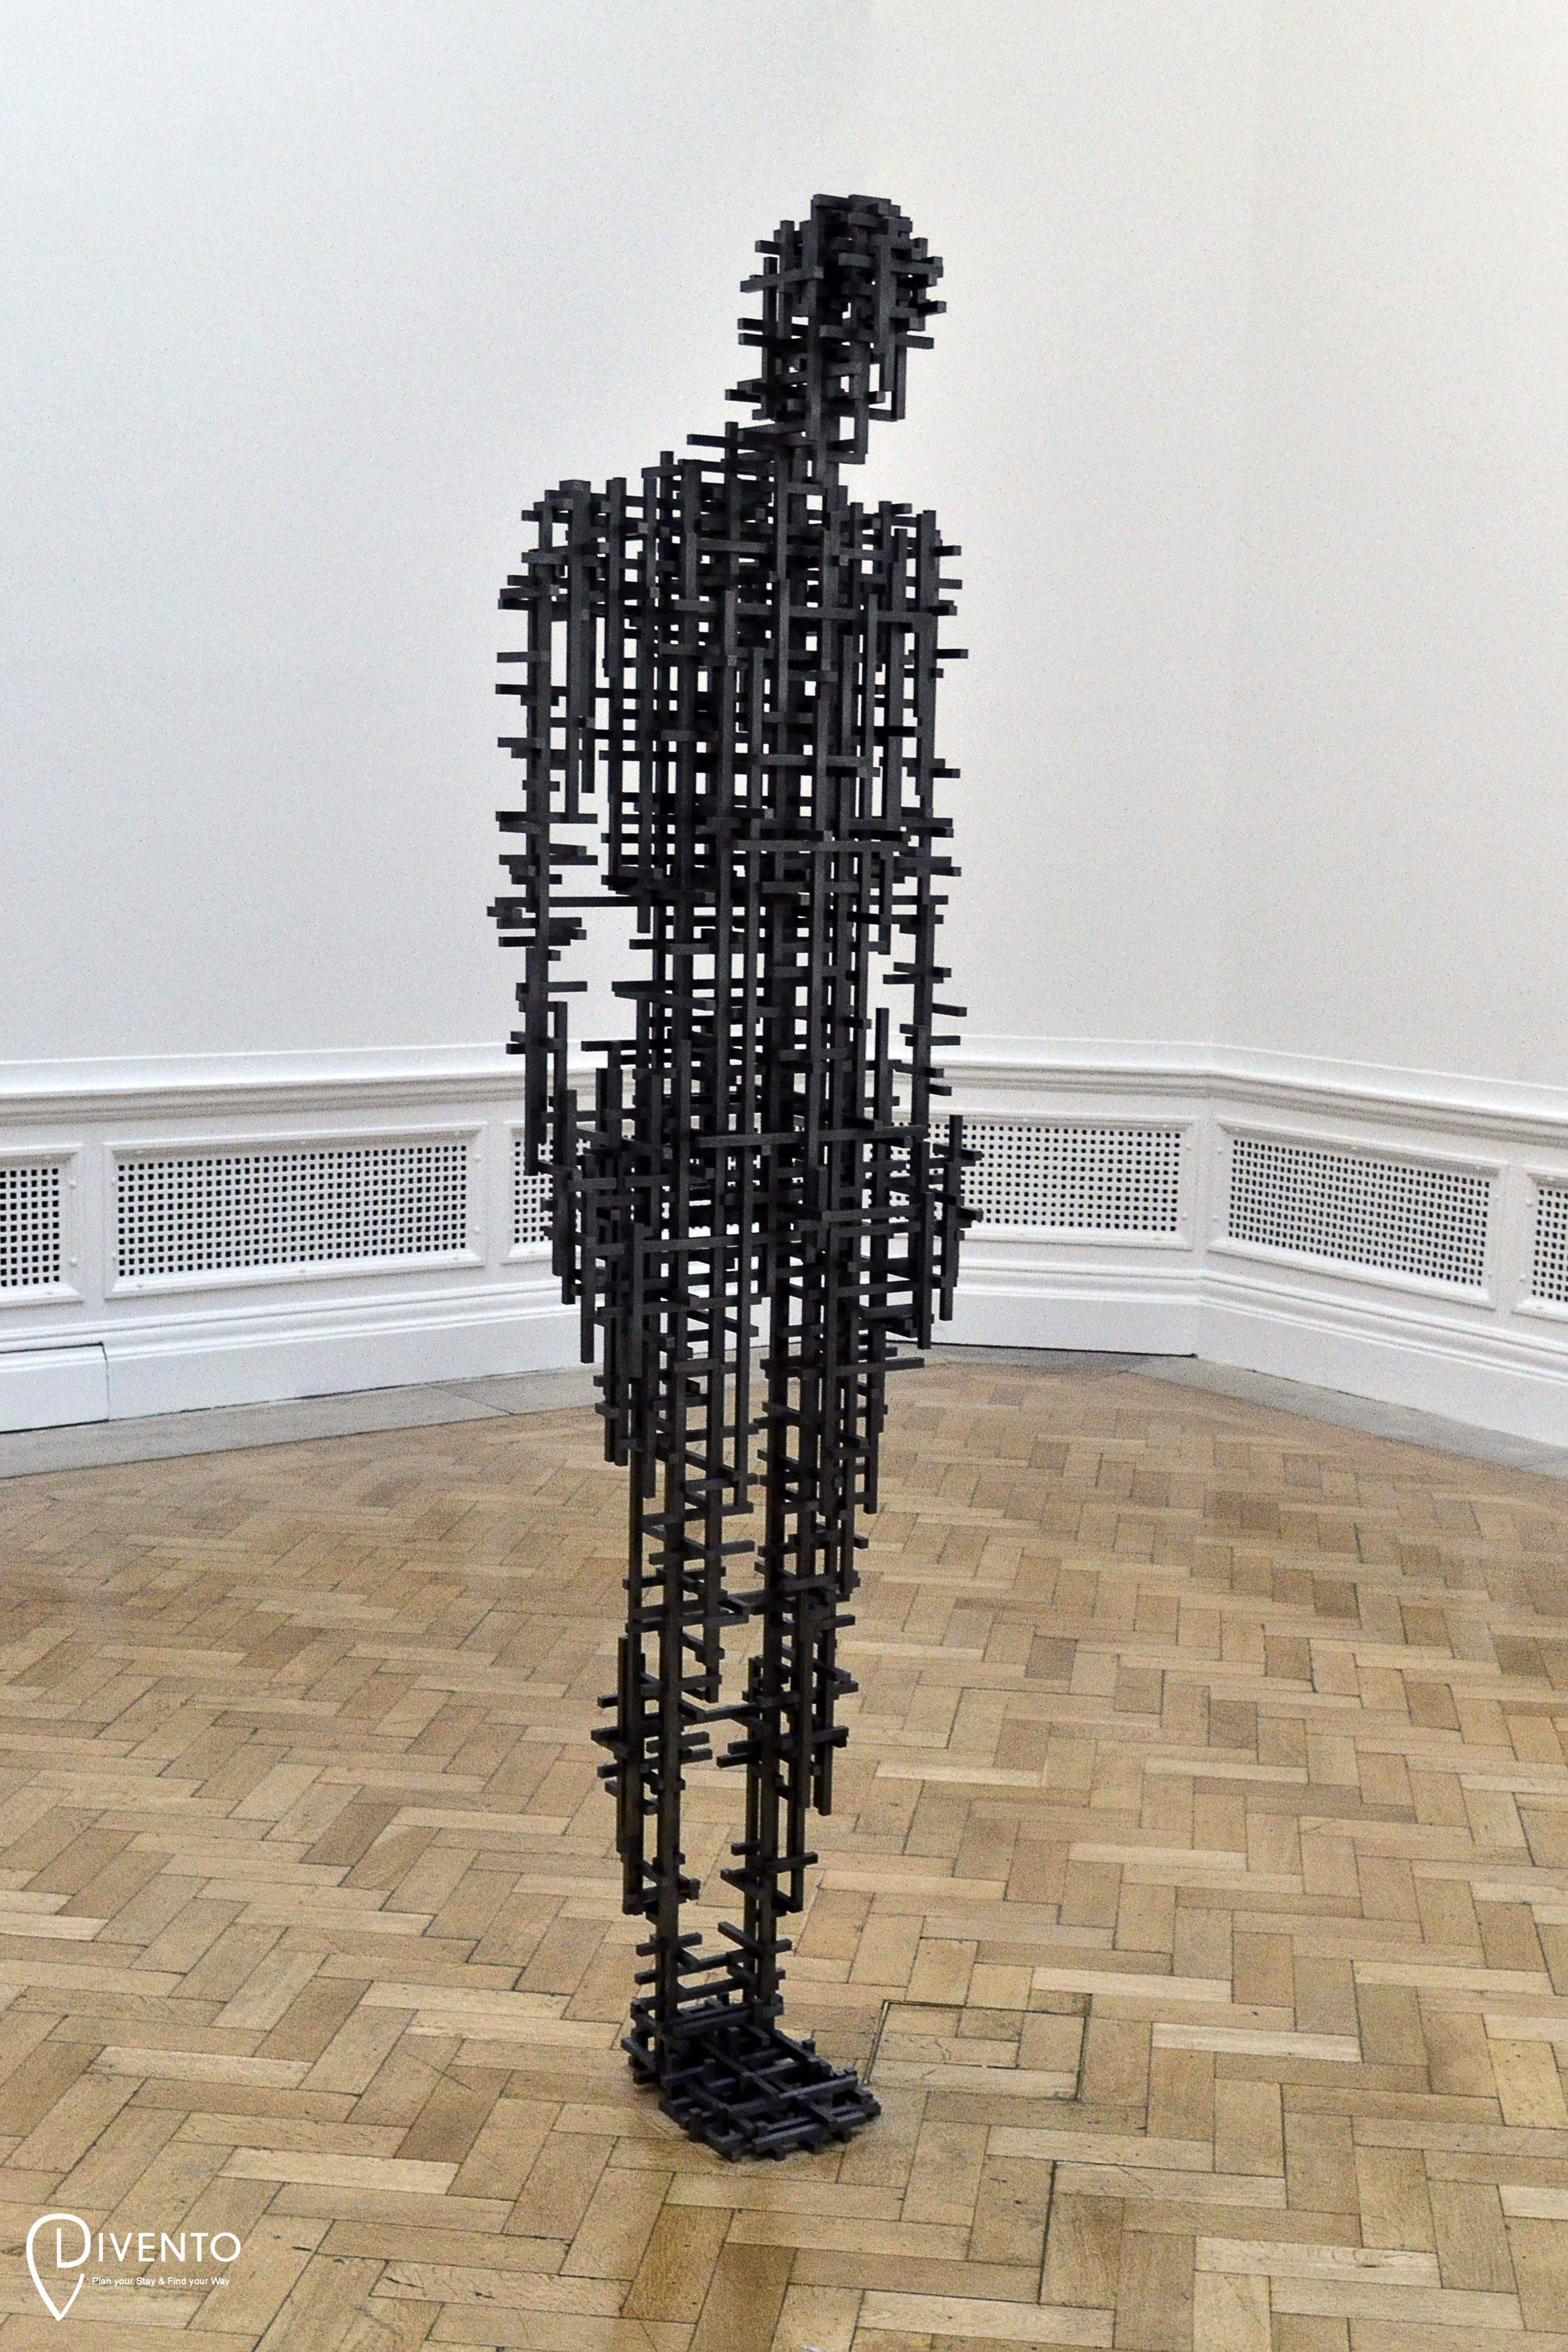 Antony Gormley, Exhibition, Royal Academy, London: 21 September-3 December 2019